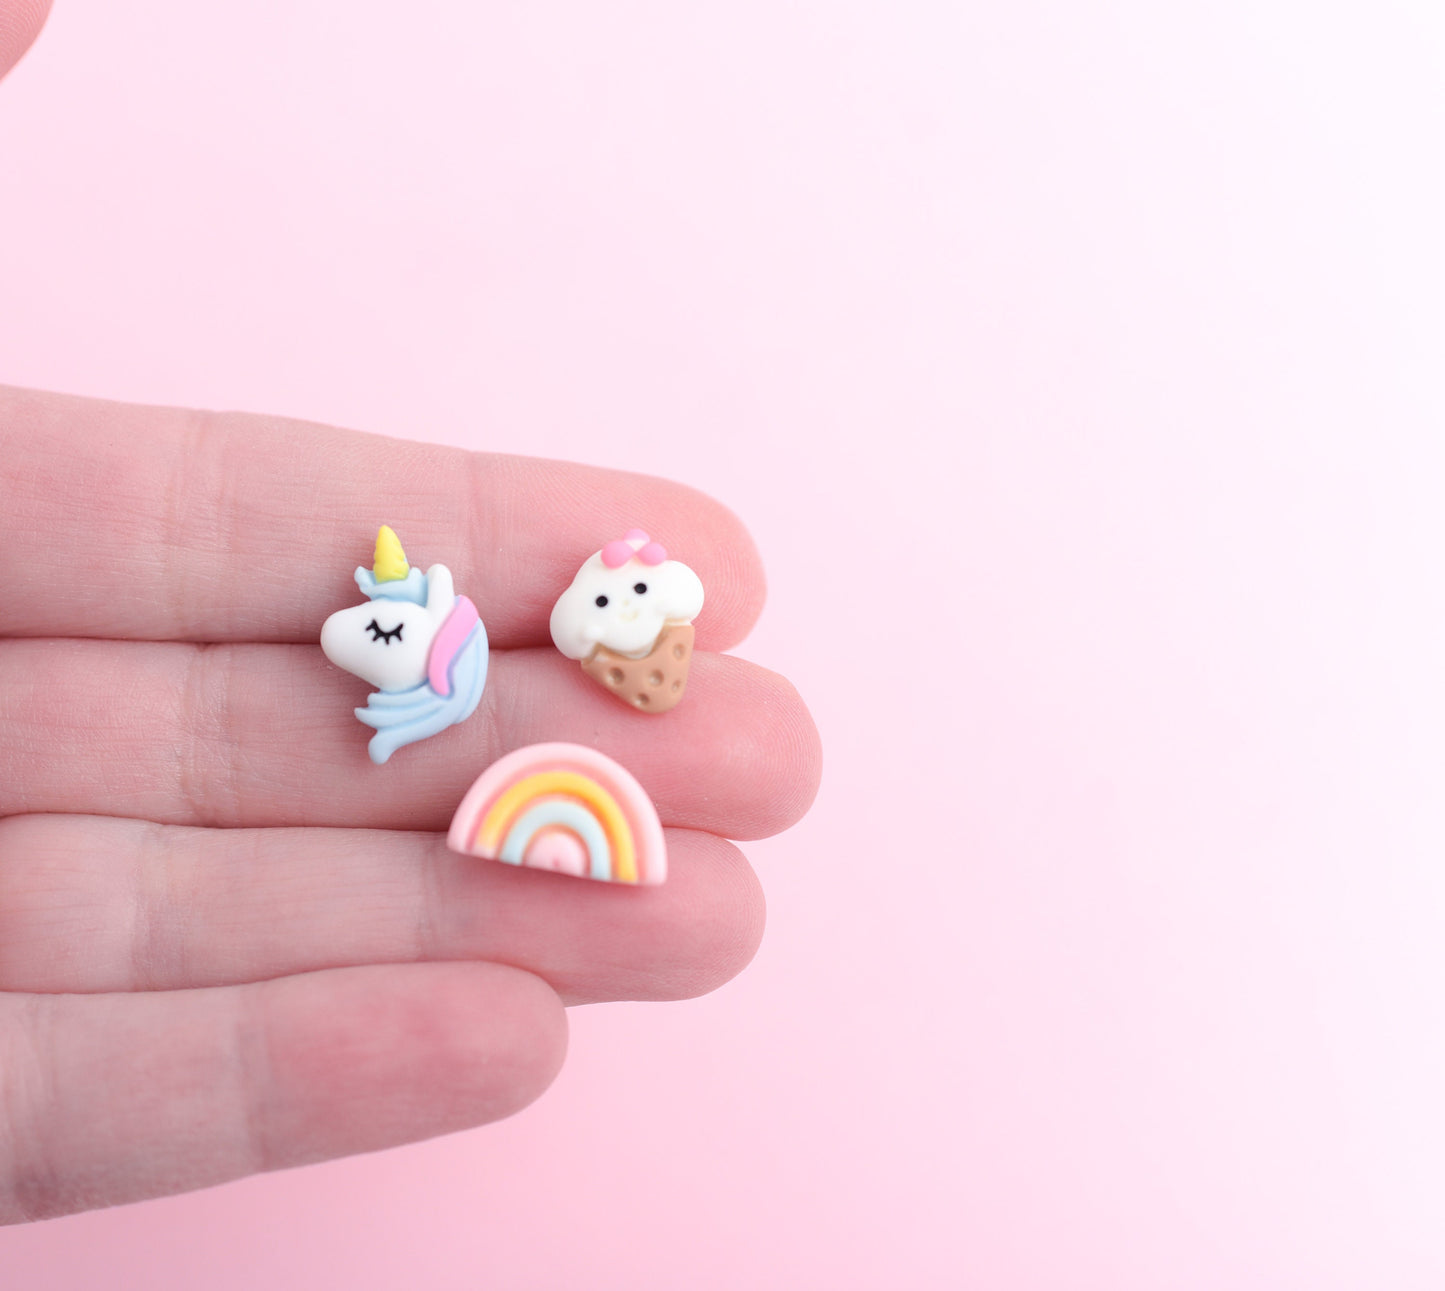 Girly Unicorn, Rainbow, and Ice Cream Cone Earring Trio with Titanium Posts